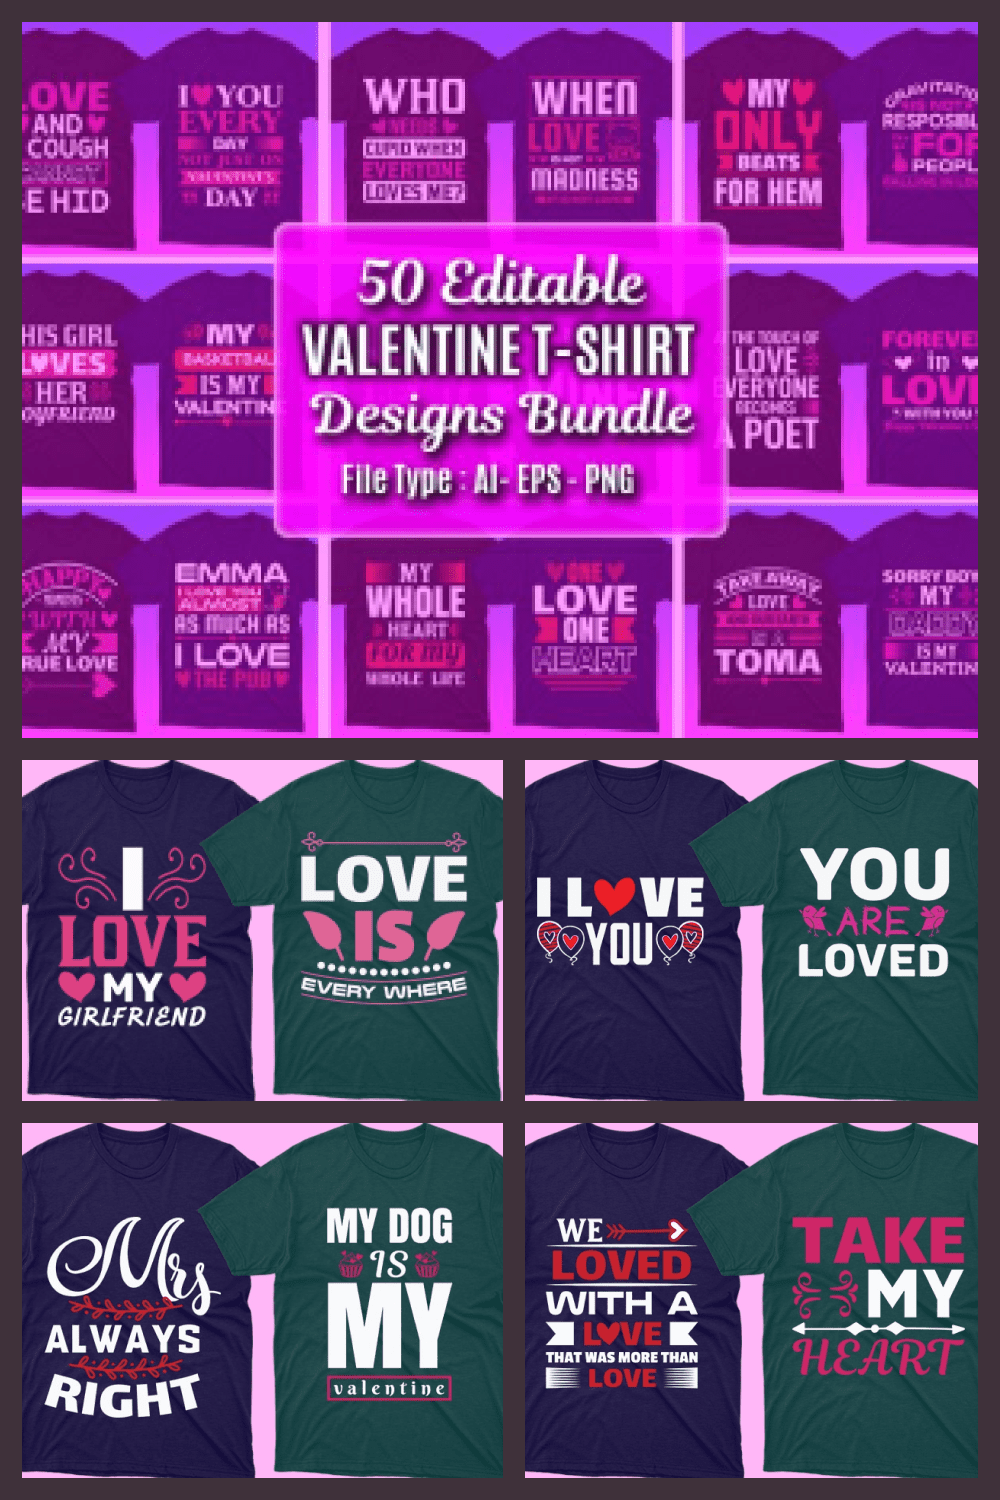 50 Editable Valentine’s day T-shirt Designs Bundle - MasterBundles - Pinterest Collage Image.